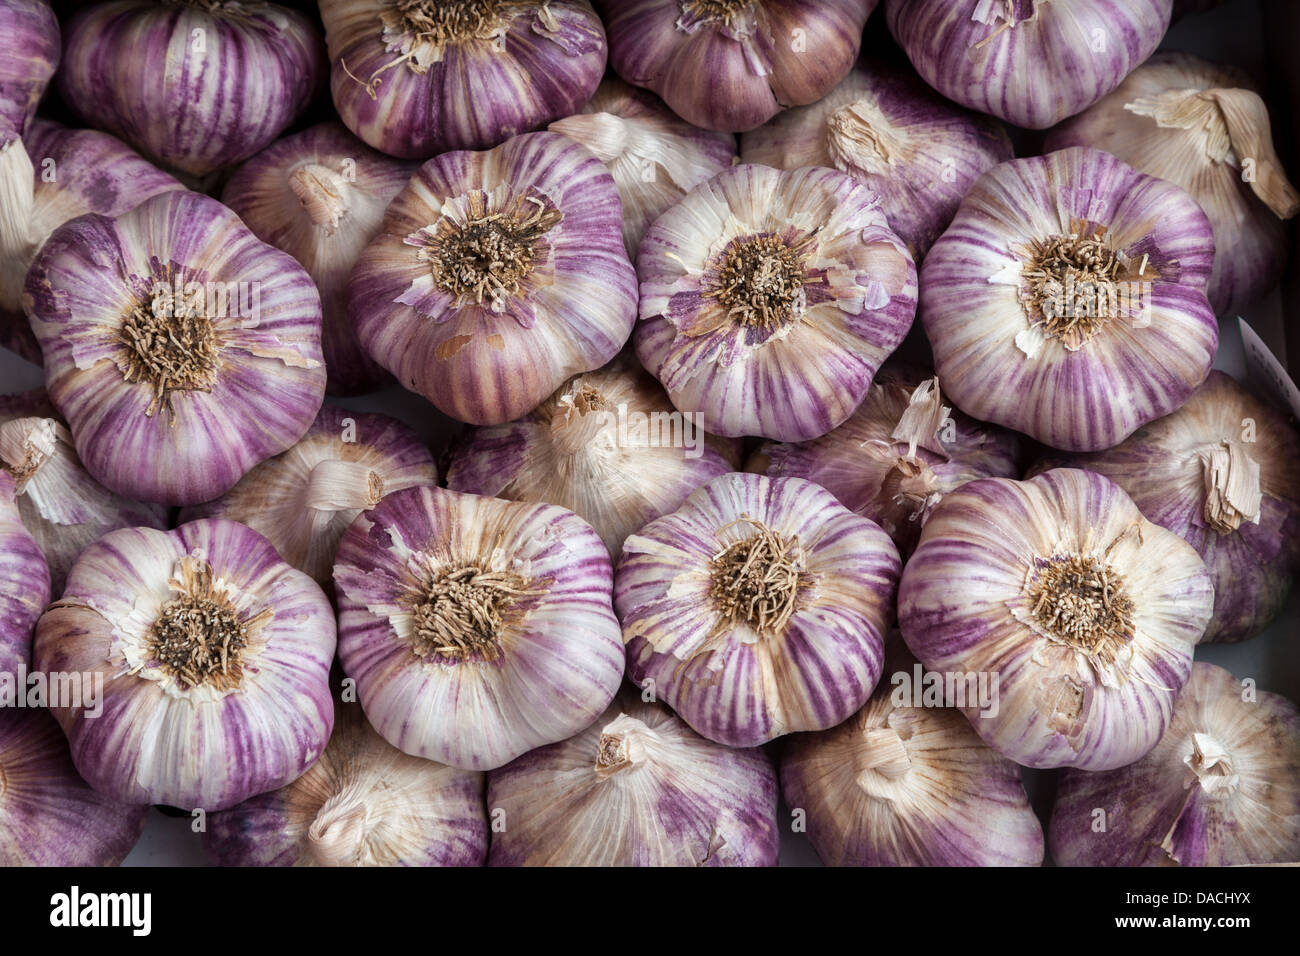 Onions on Market Stall, Nuremberg, Germany, Europe. Stock Photo